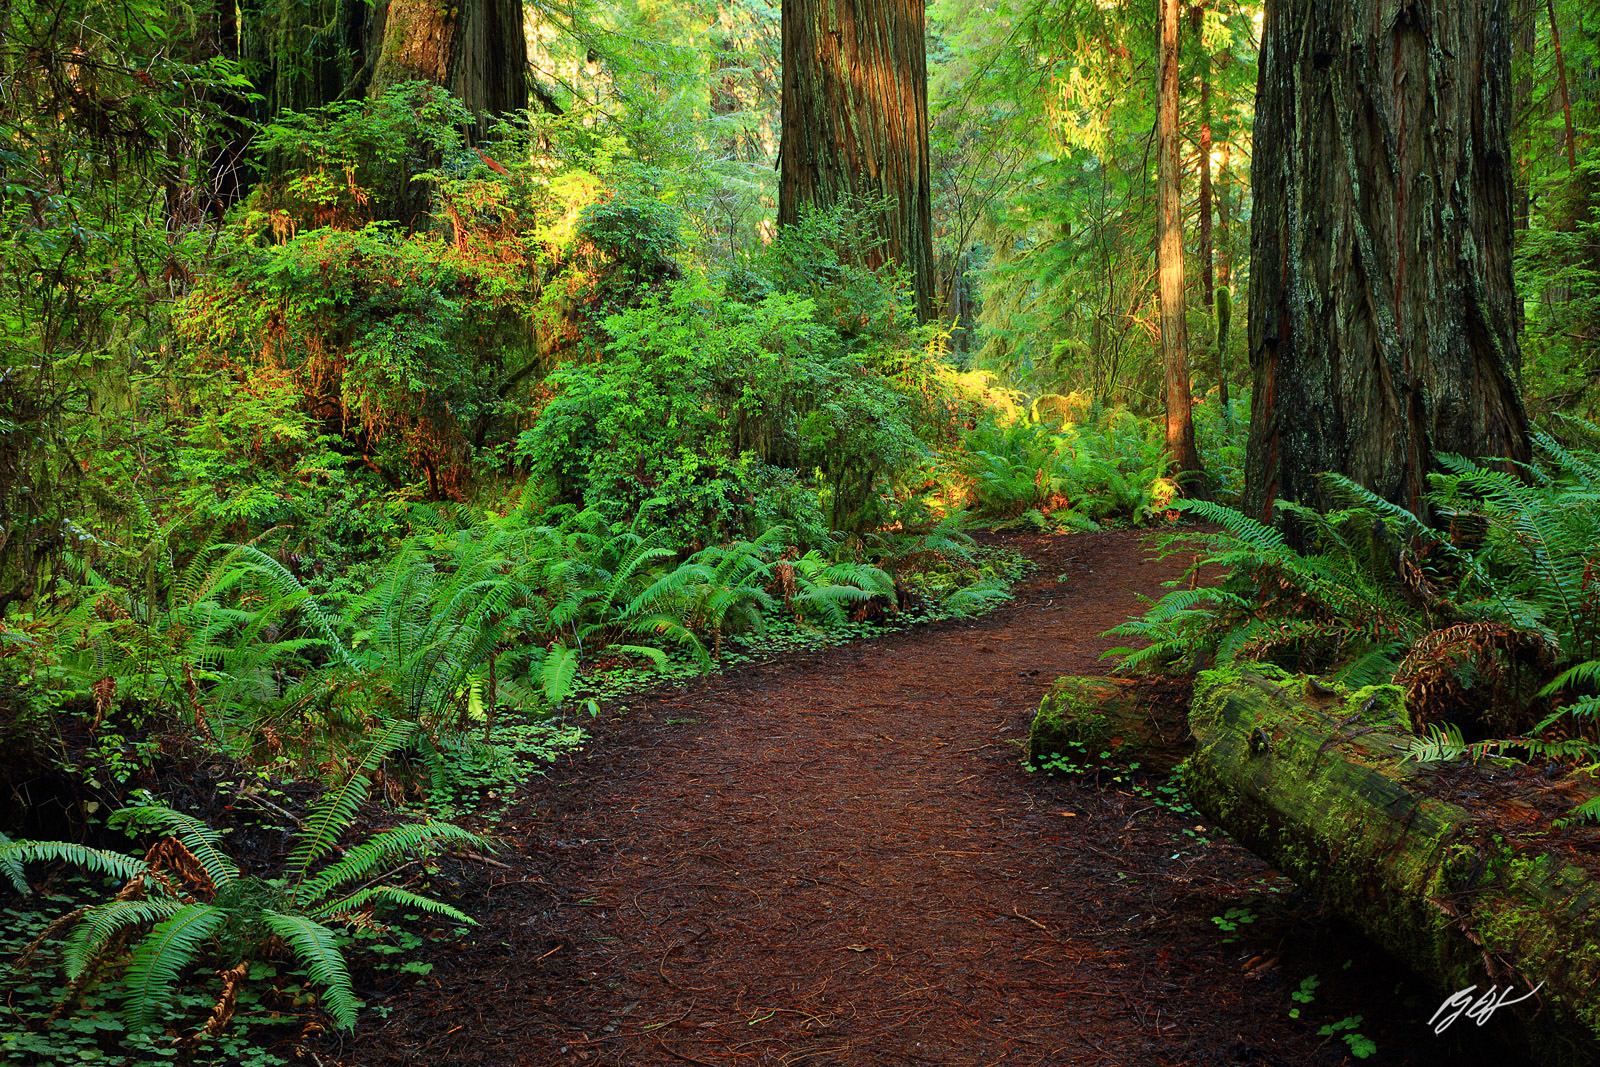 Redwoods in Prairie Creek Redwoods State Park in California